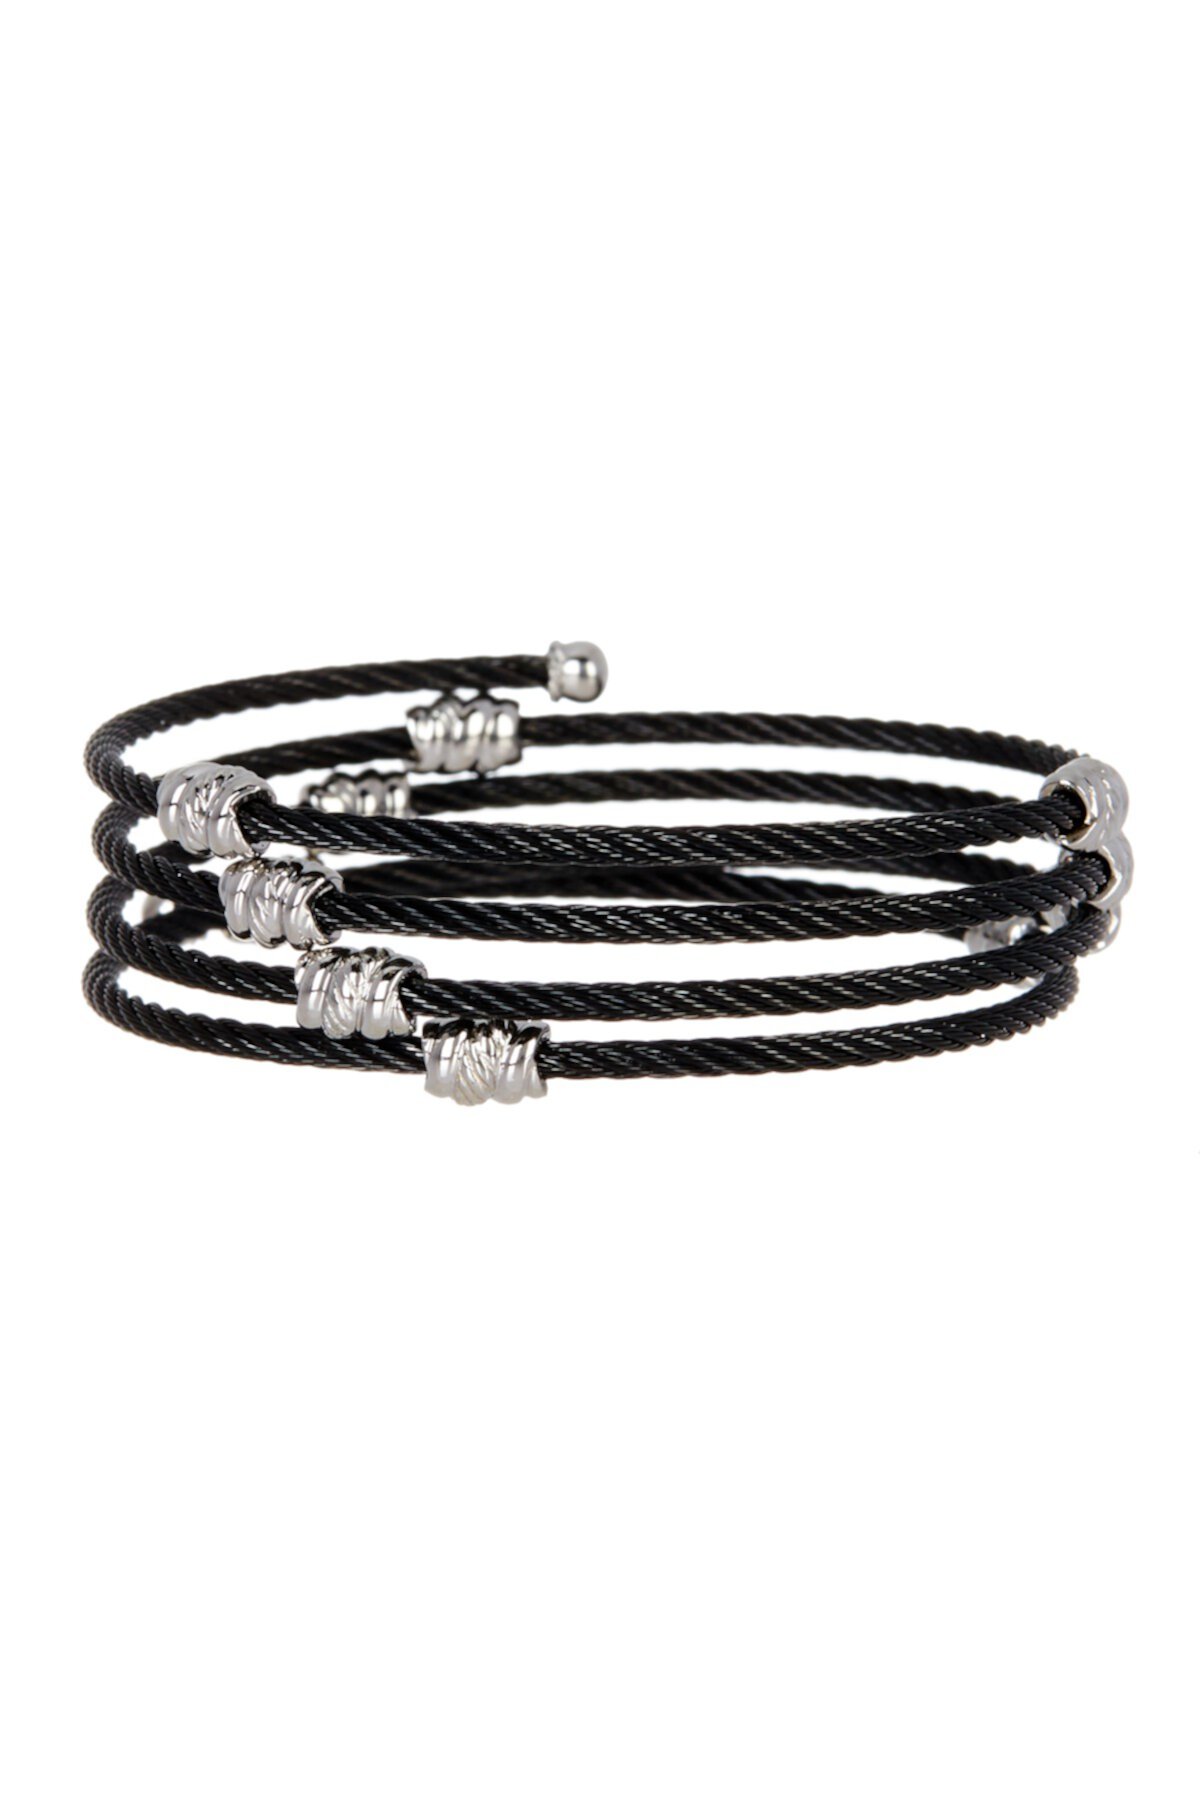 White & Black Stainless Steel Cable Bracelet ALOR